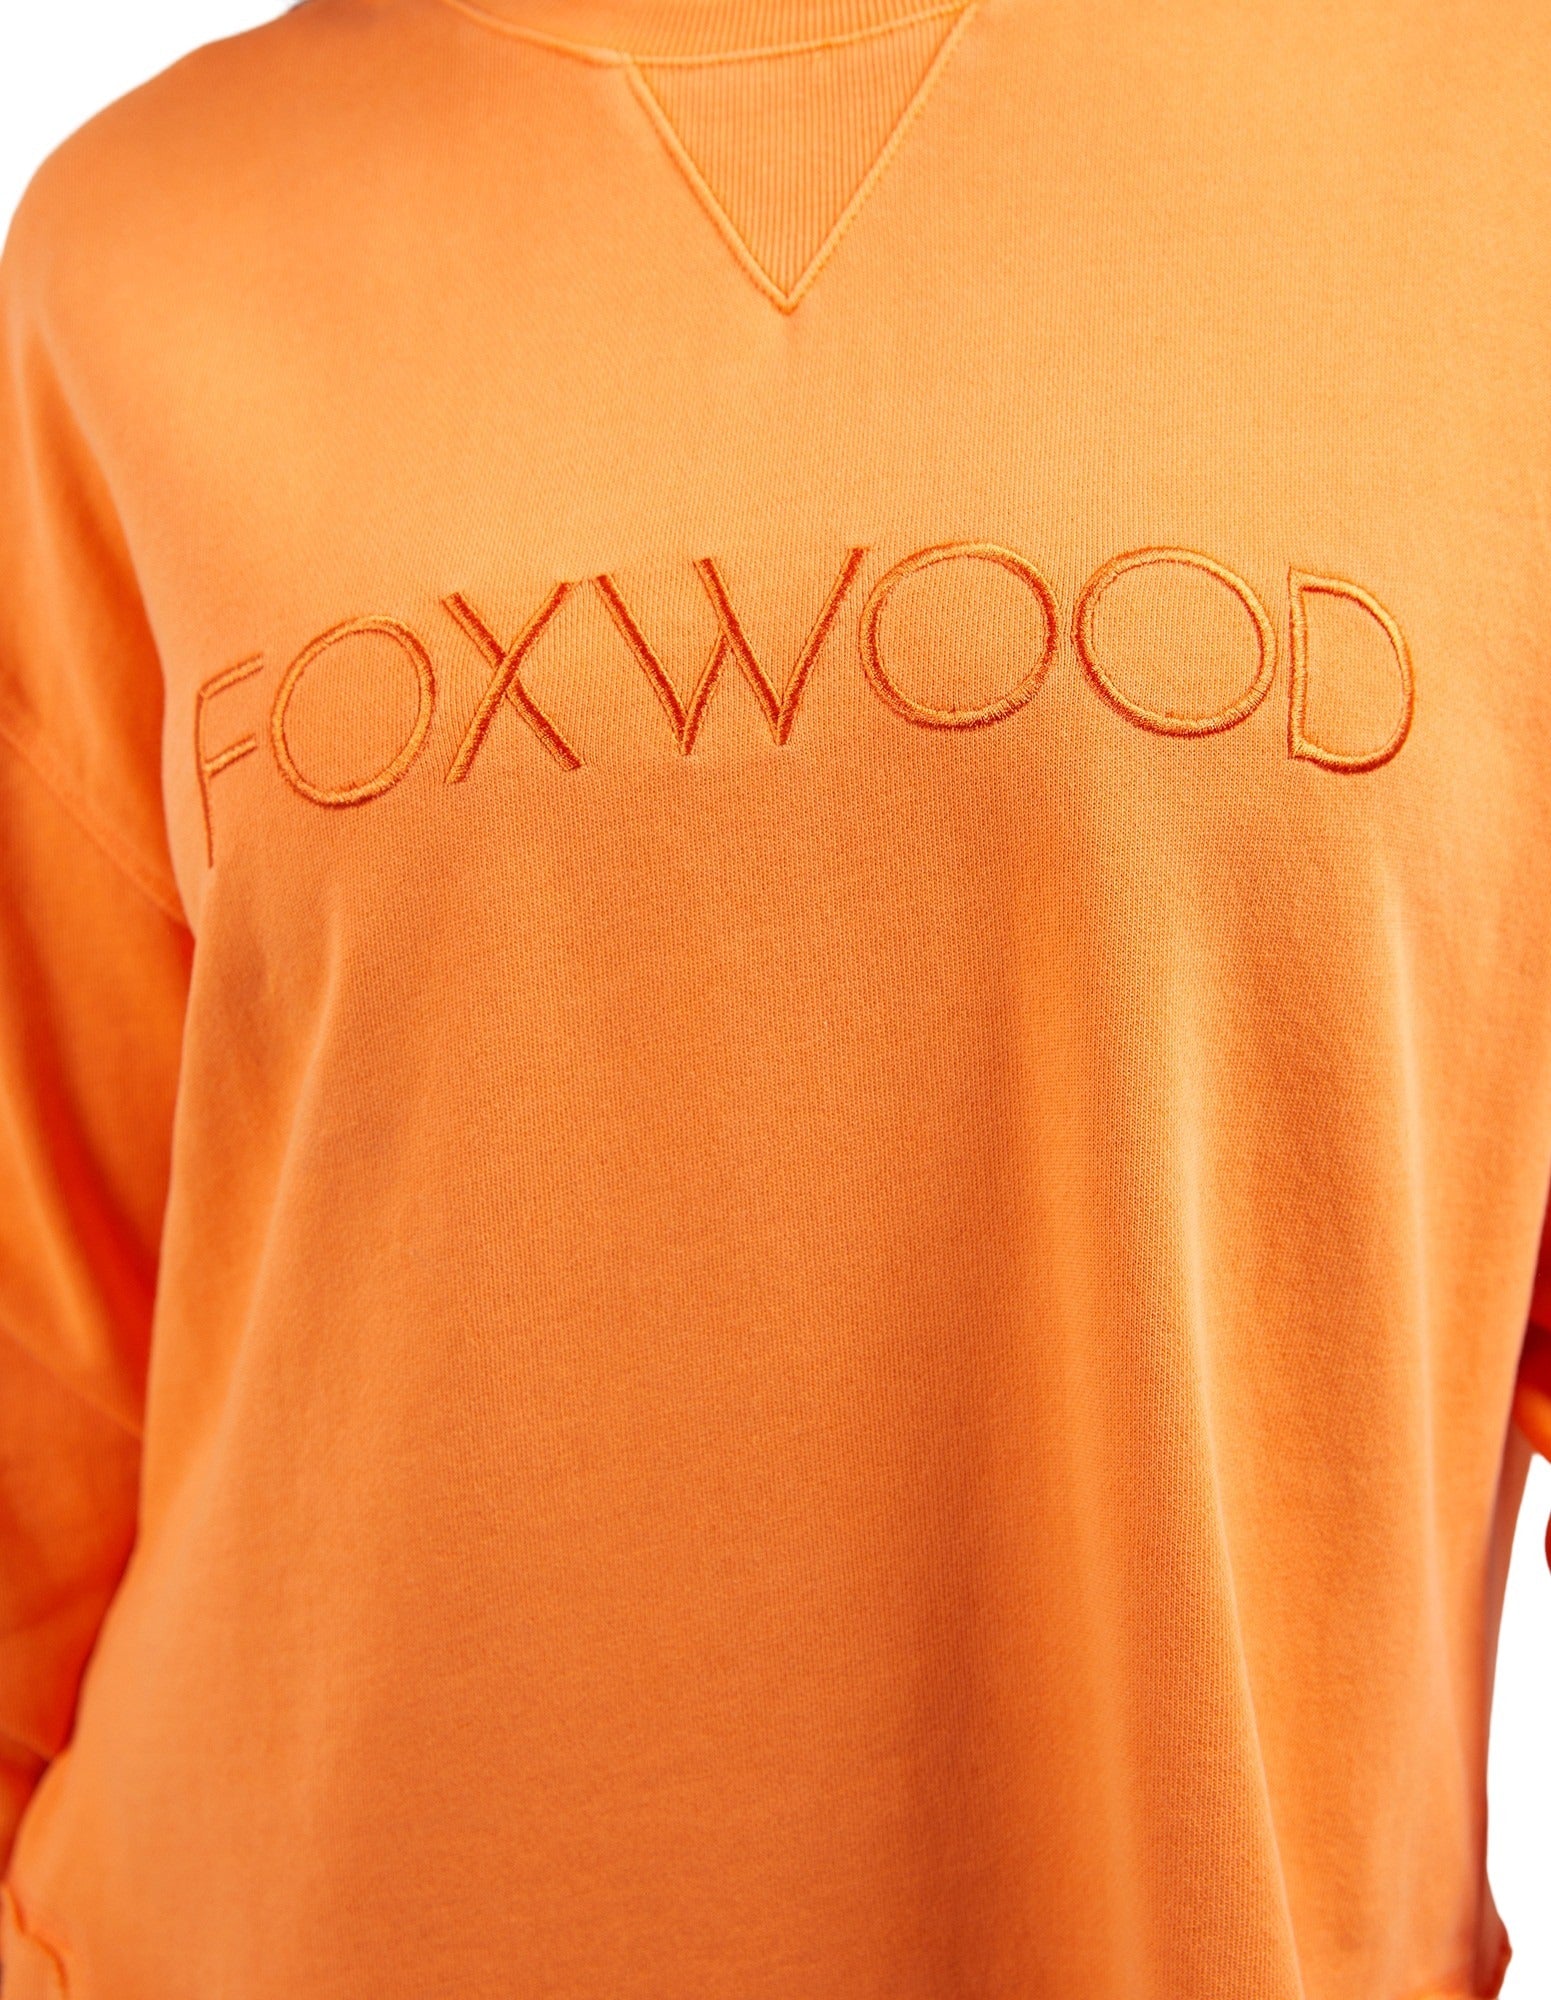 Foxwood Simplified Crew - Orange